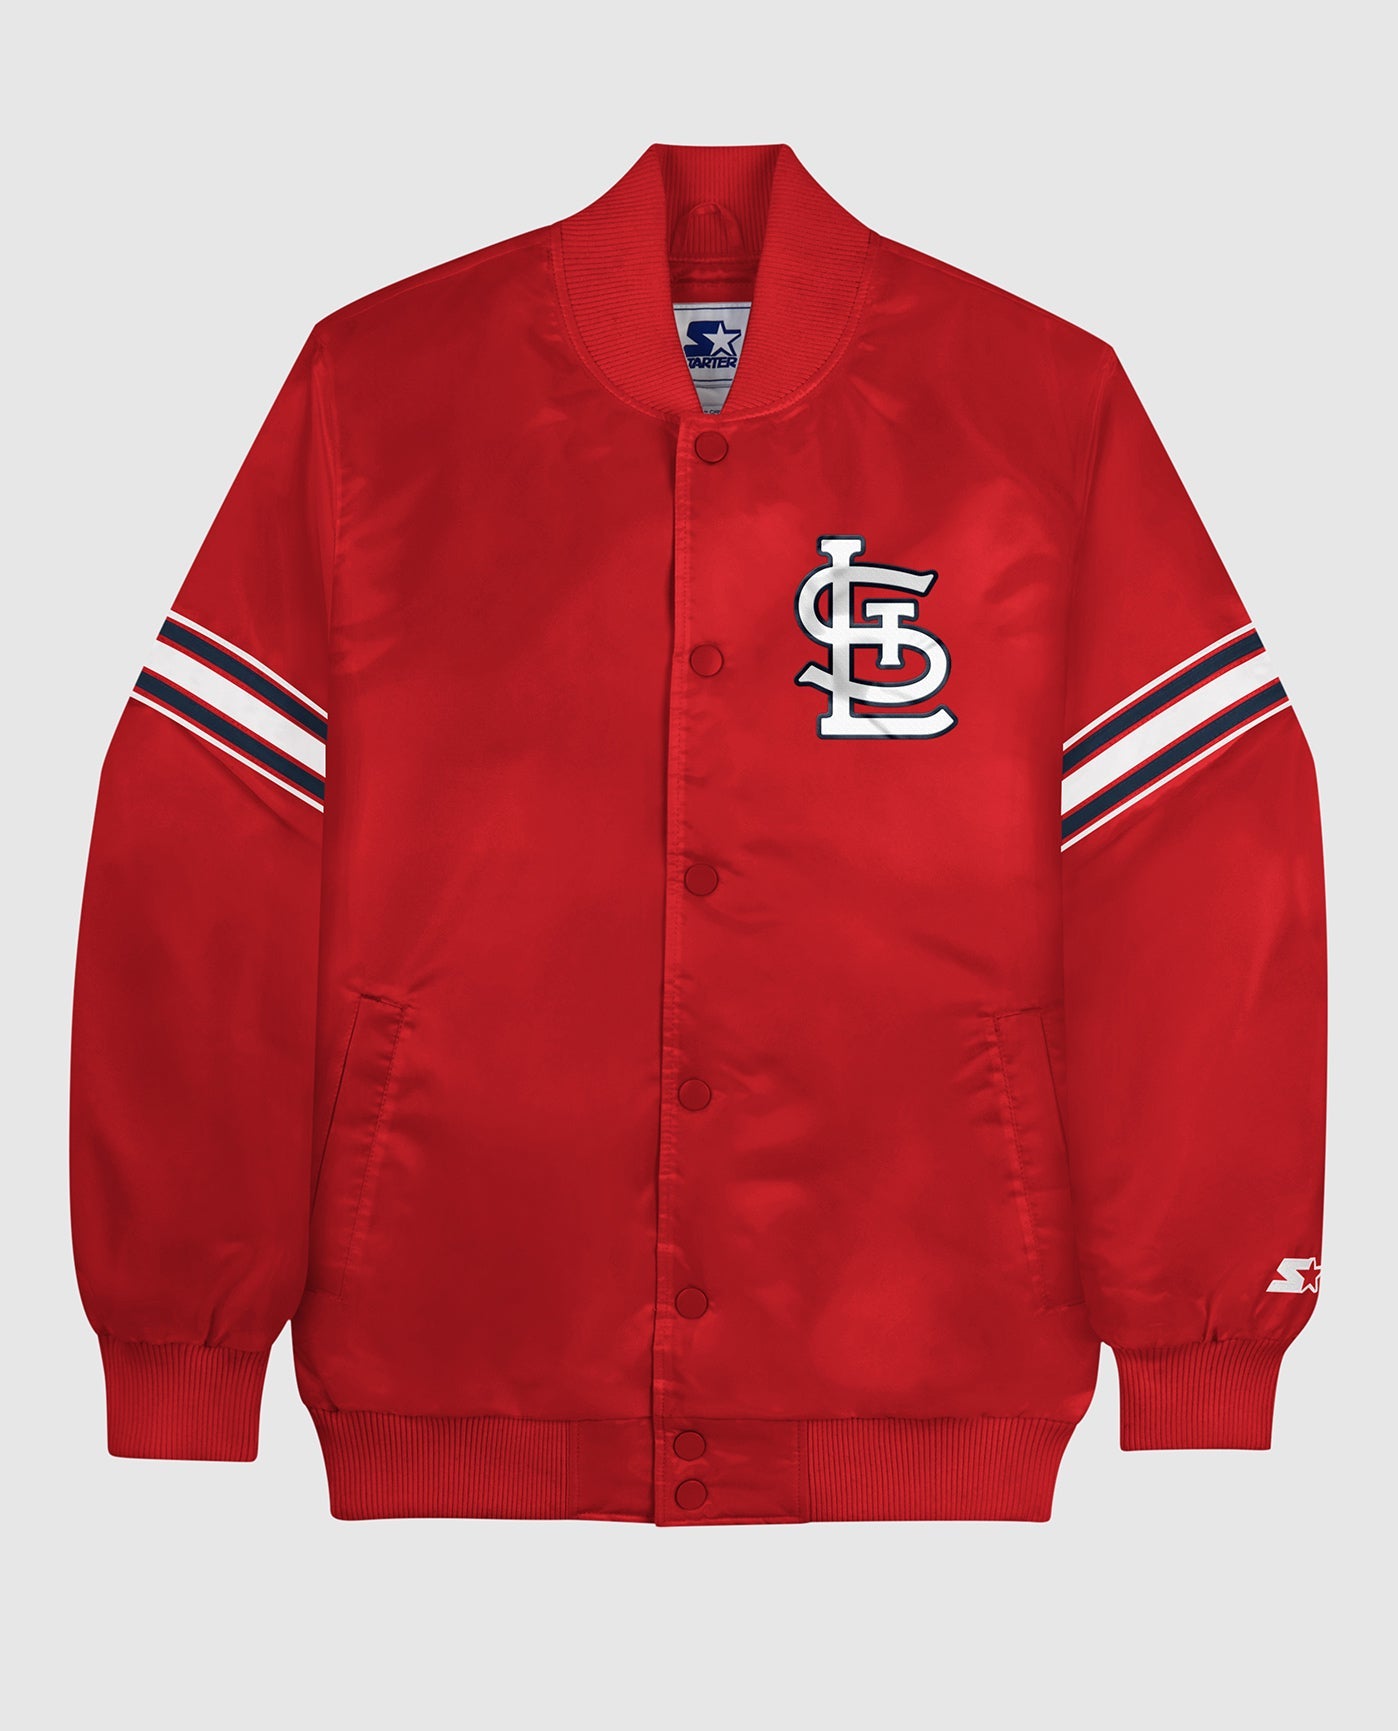 St. Louis Cardinals Starter Home Game Satin Full-Snap Varsity Jacket - Navy